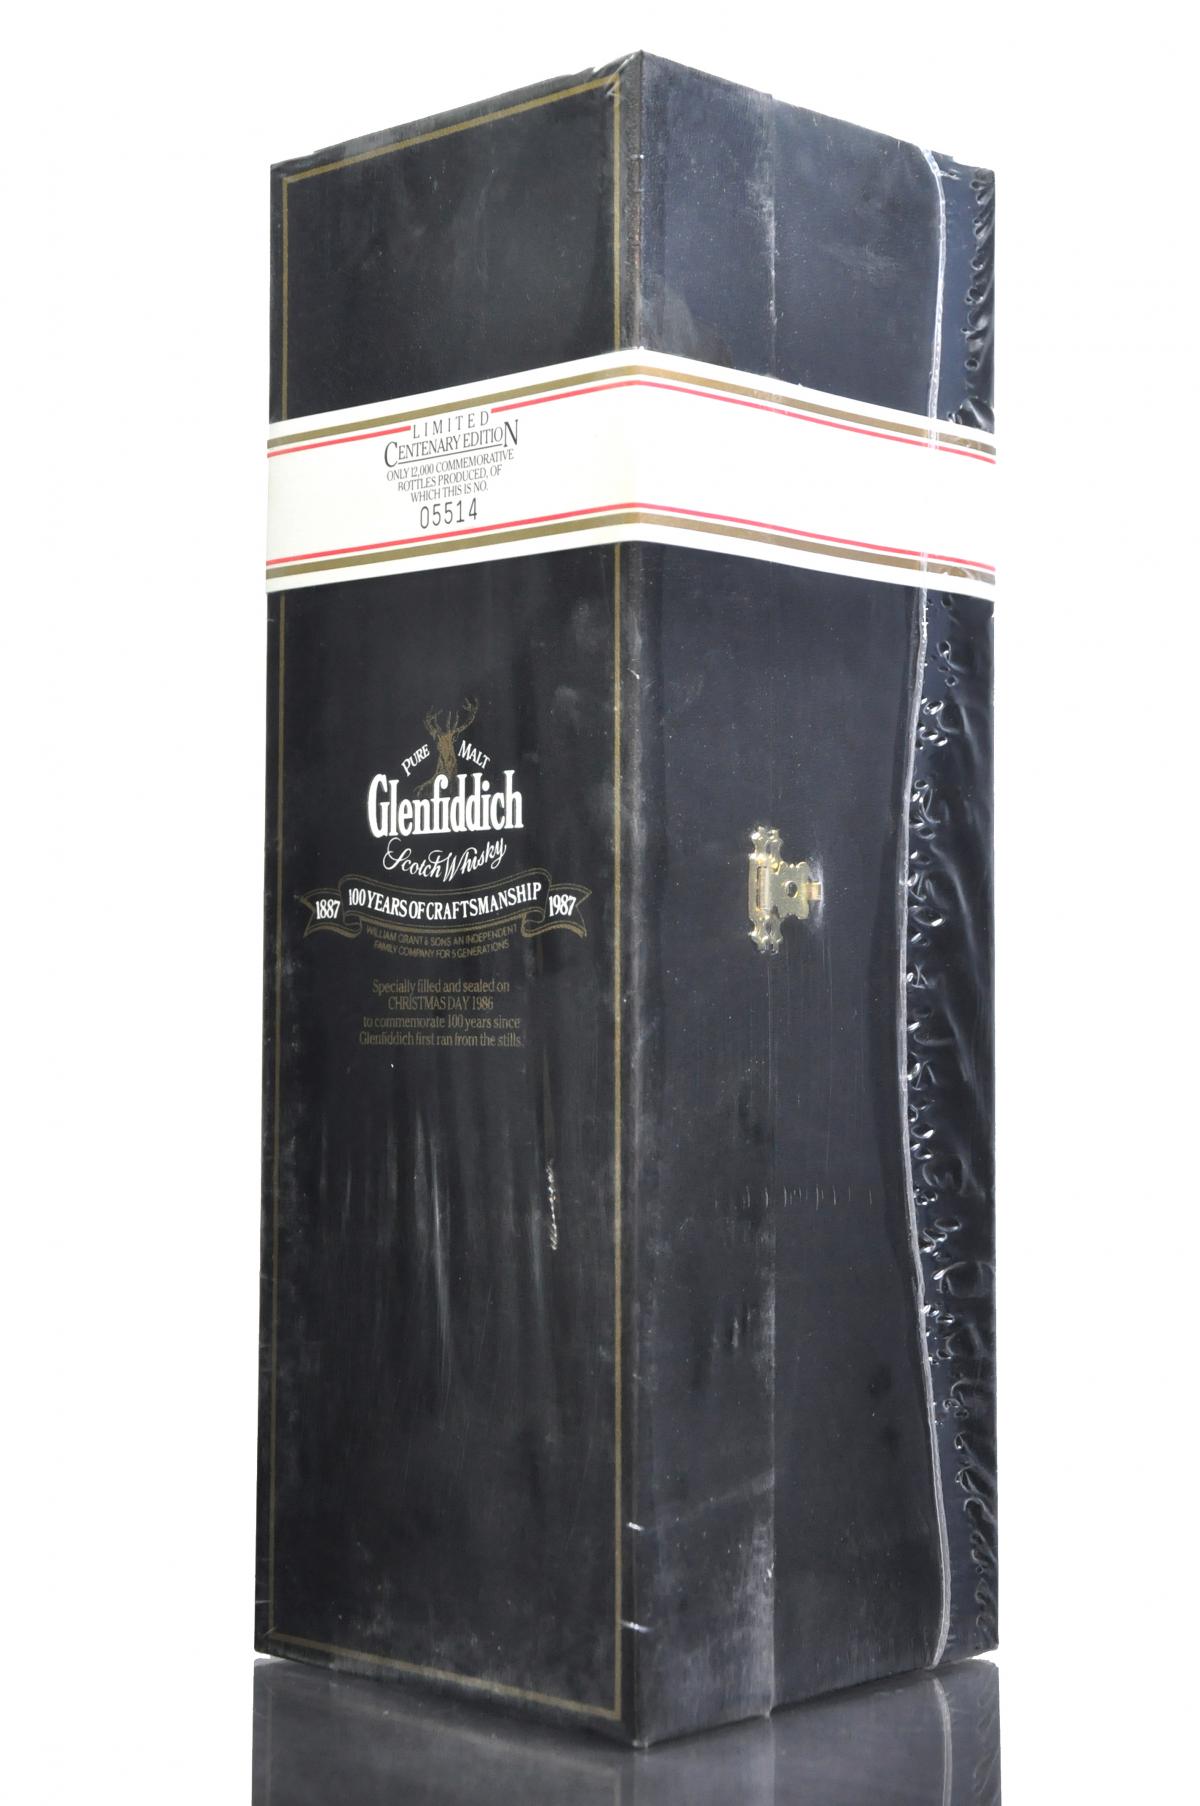 Glenfiddich Centenary Edition 1887-1987